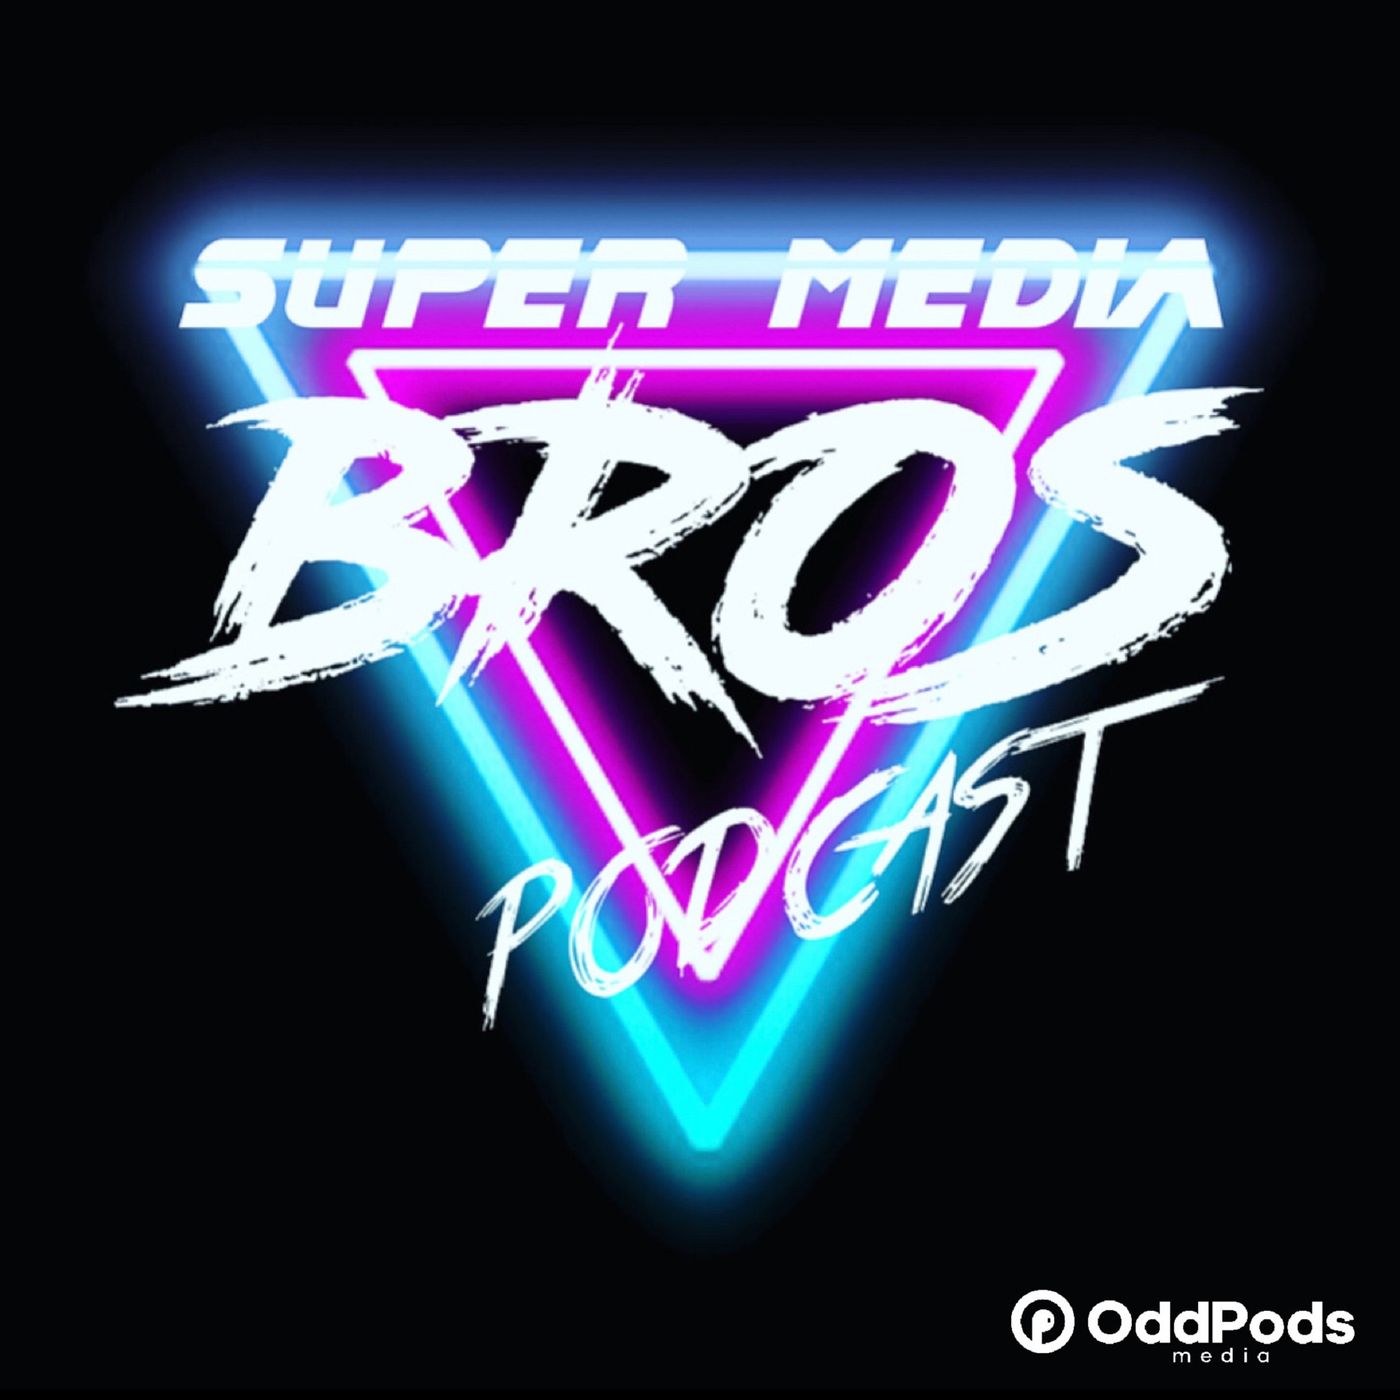 Super Media Bros Podcast Trailer